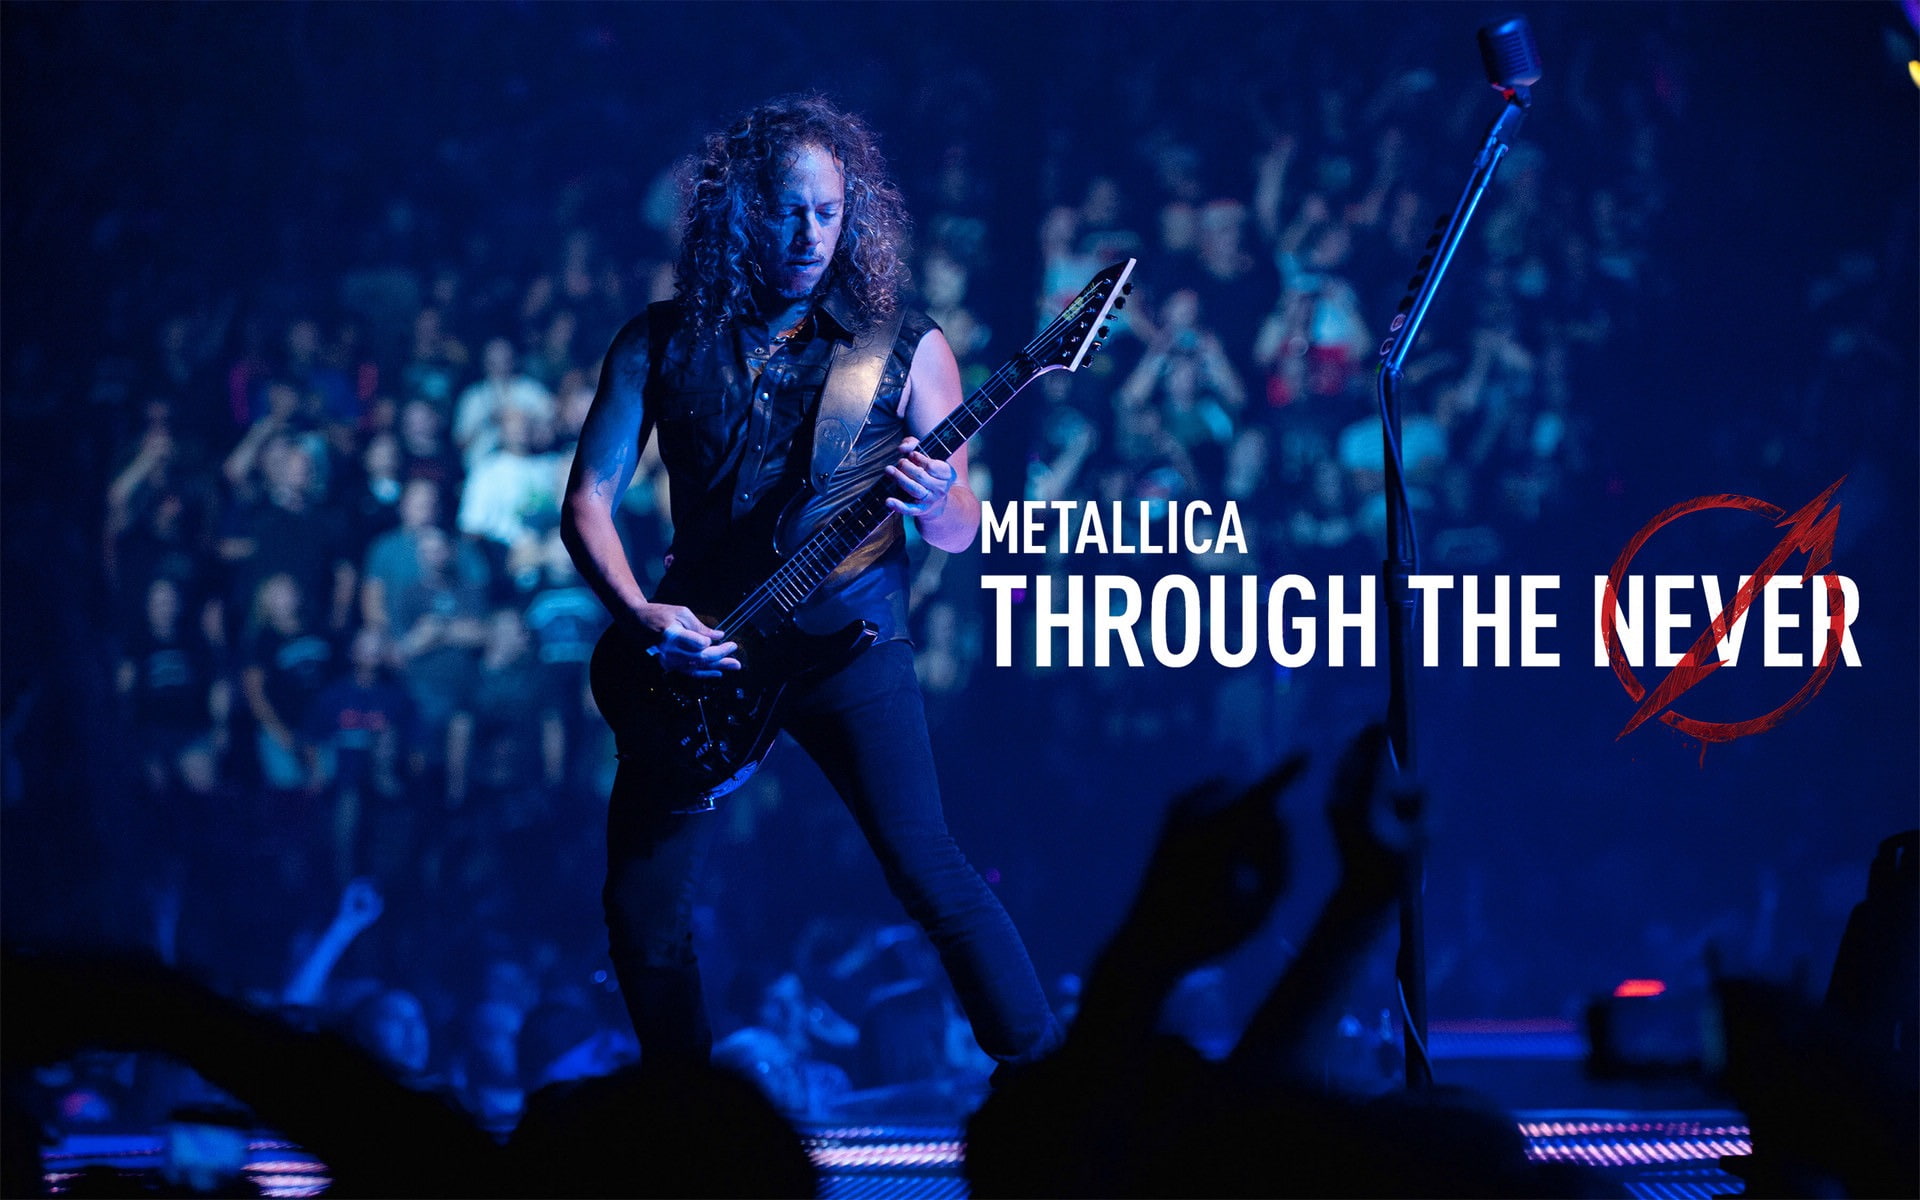 Metallica Through the Never Movie HD Wallpaper 08, Metallica Through The Never advertisement